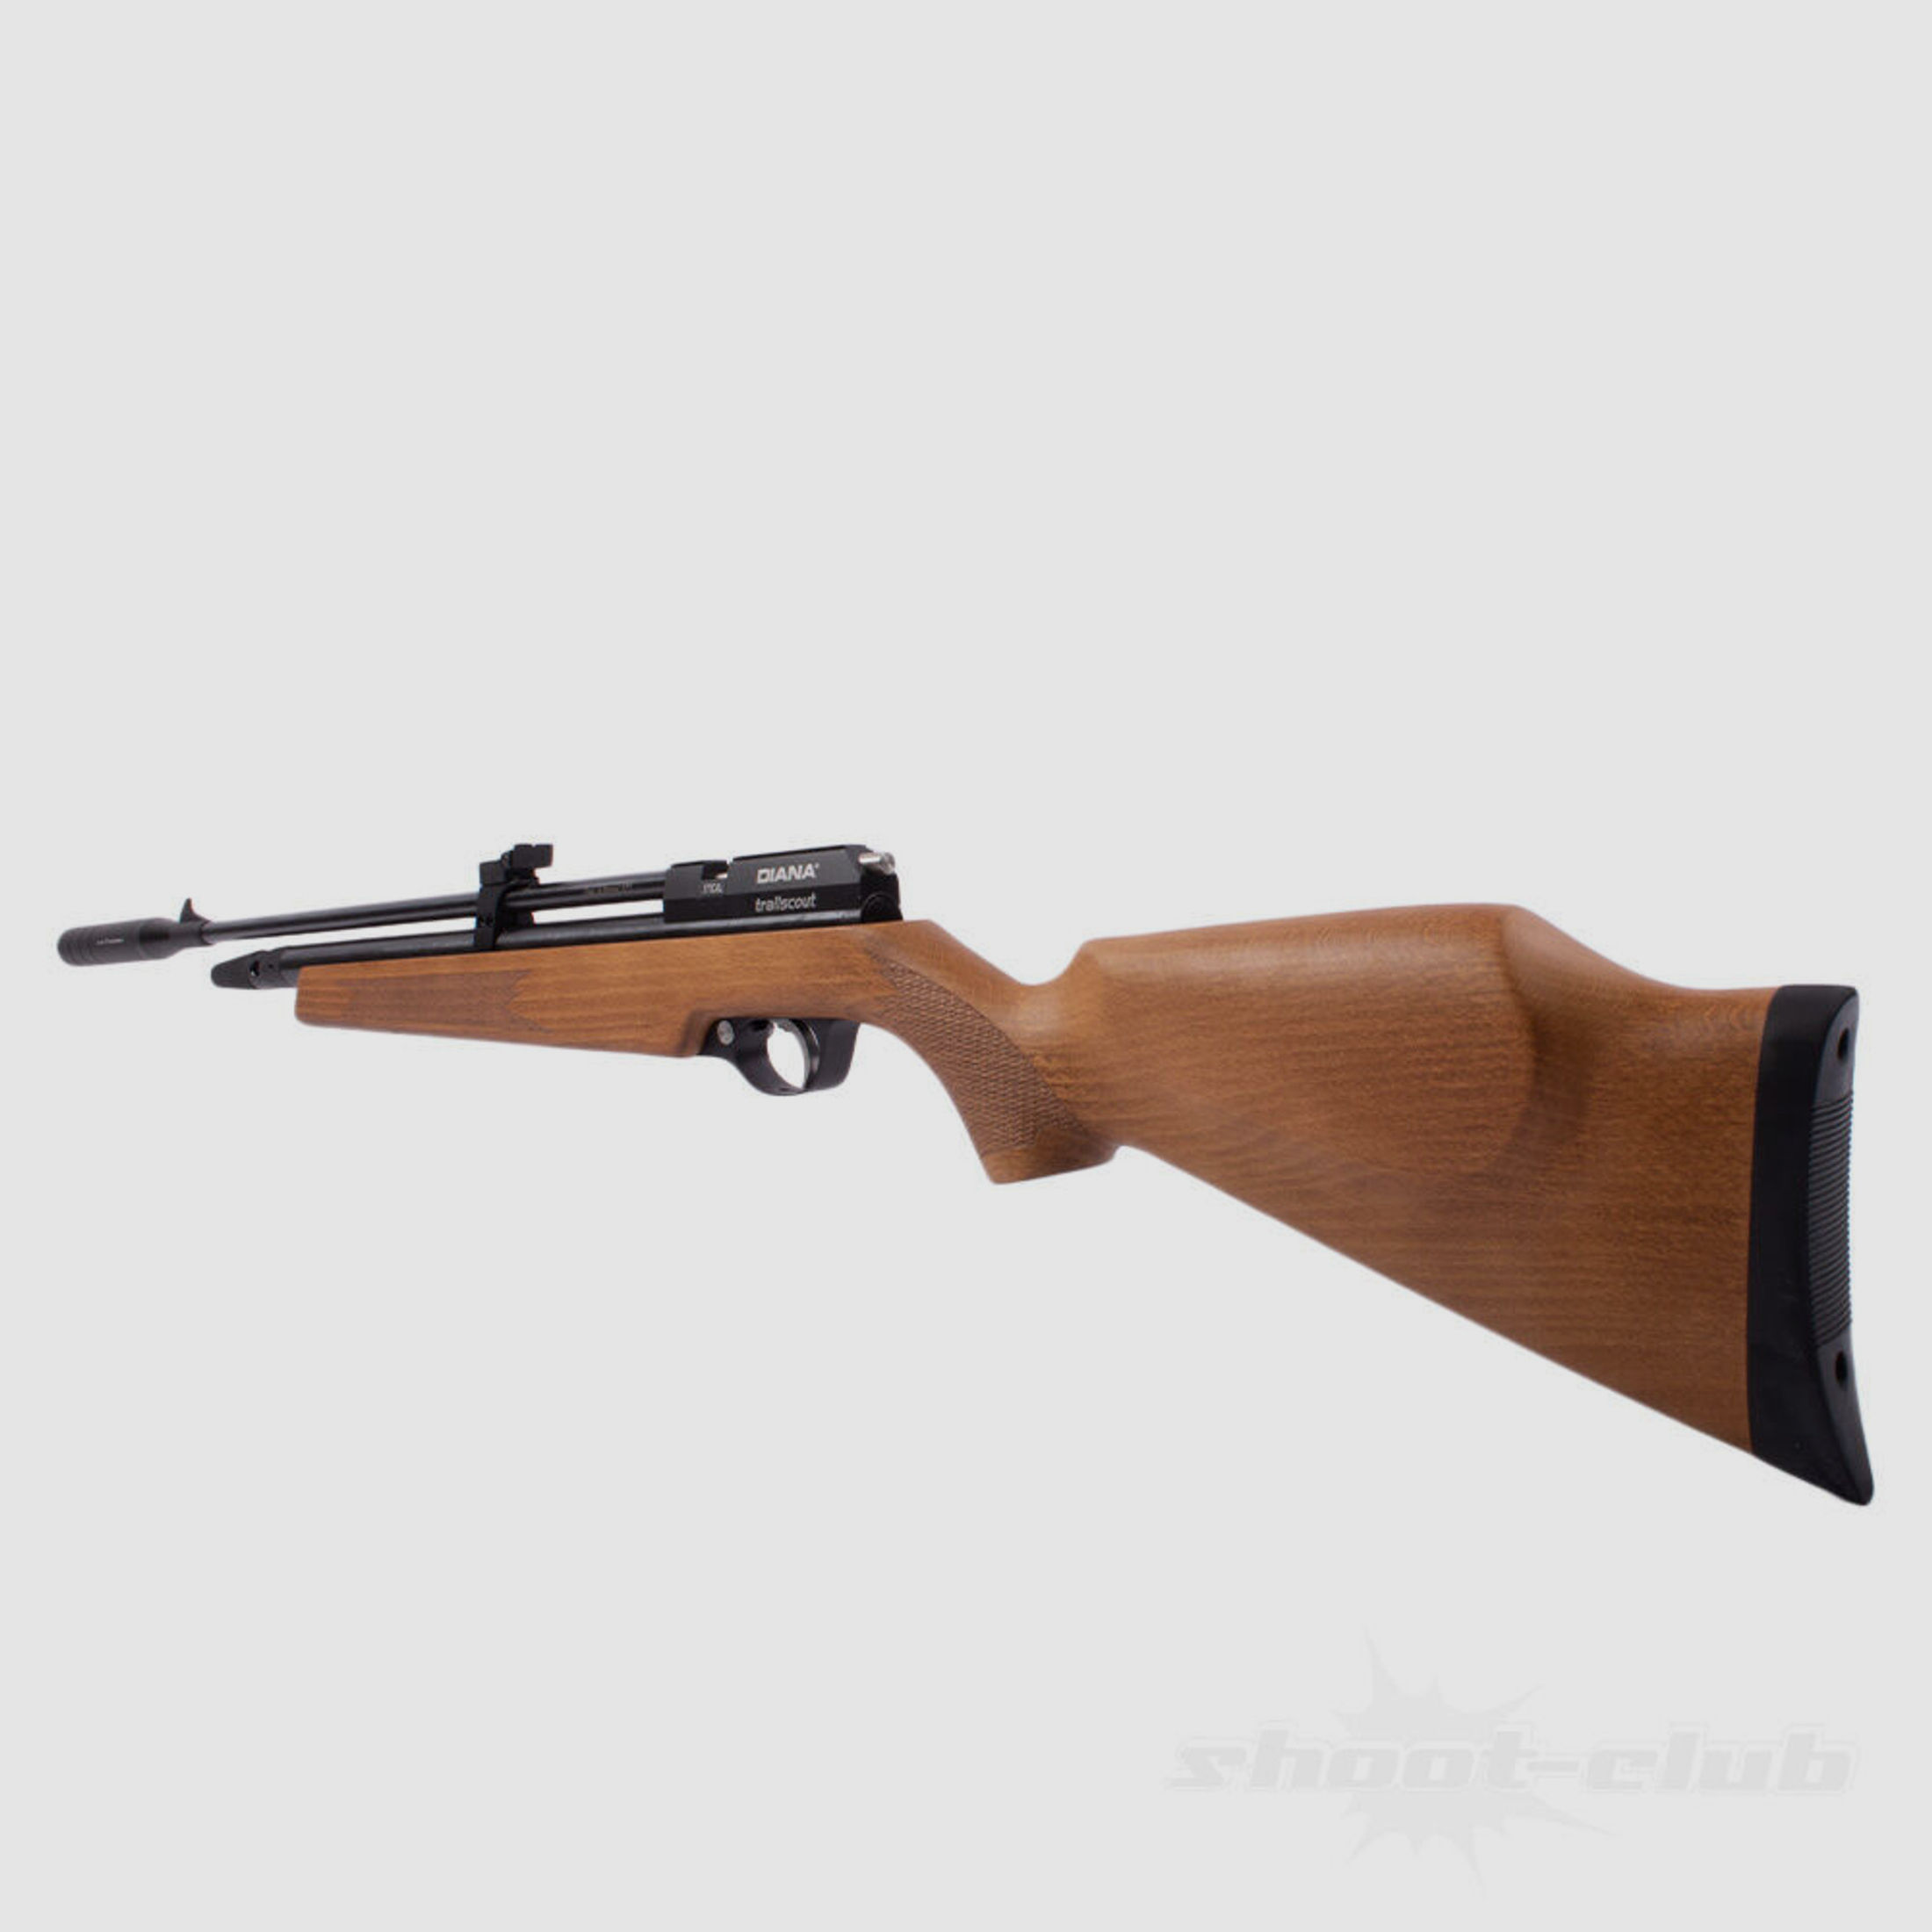 Diana Trailscout Wood CO2 Gewehr .4,5mm Diabolo 9 Schuss Magazin